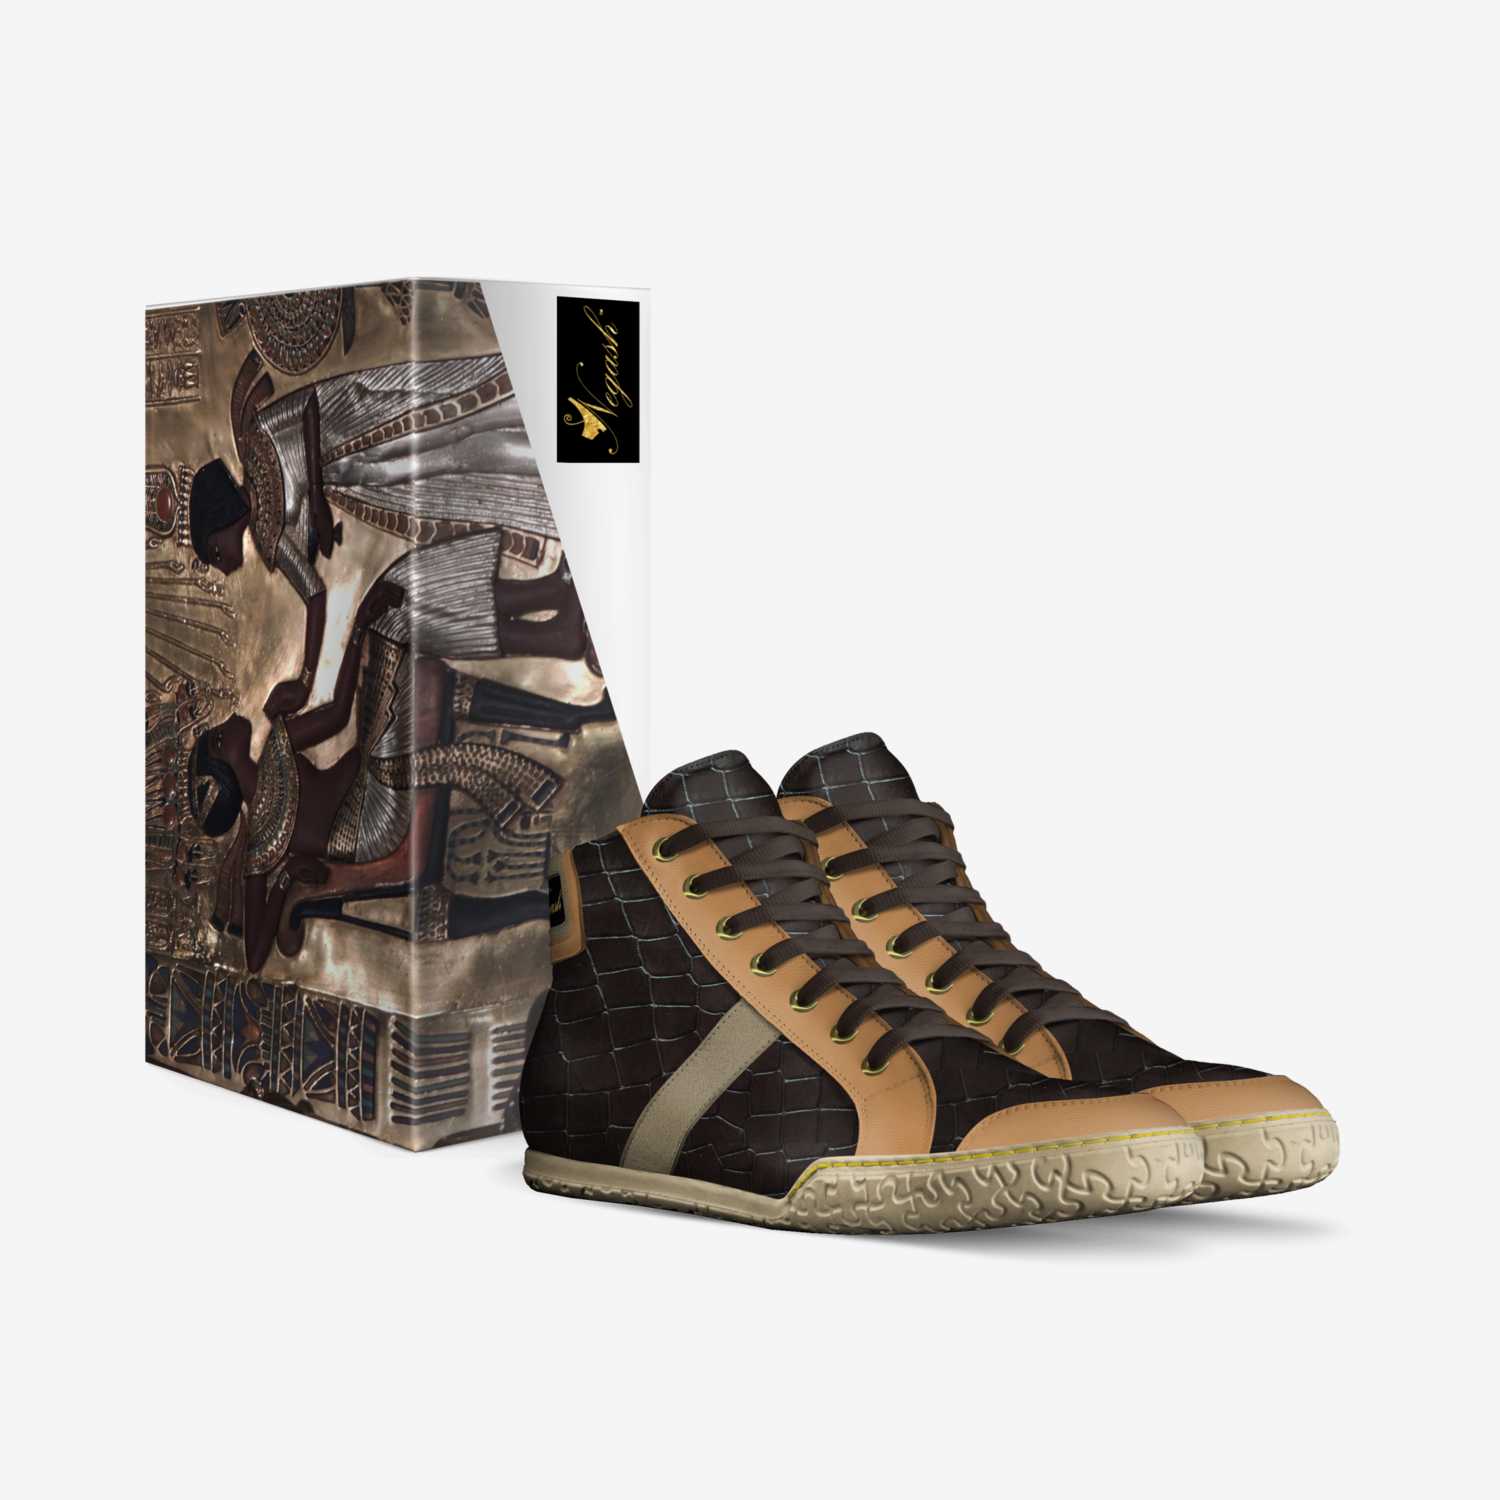 Negash Sobek custom made in Italy shoes by Rocklin Negash | Box view